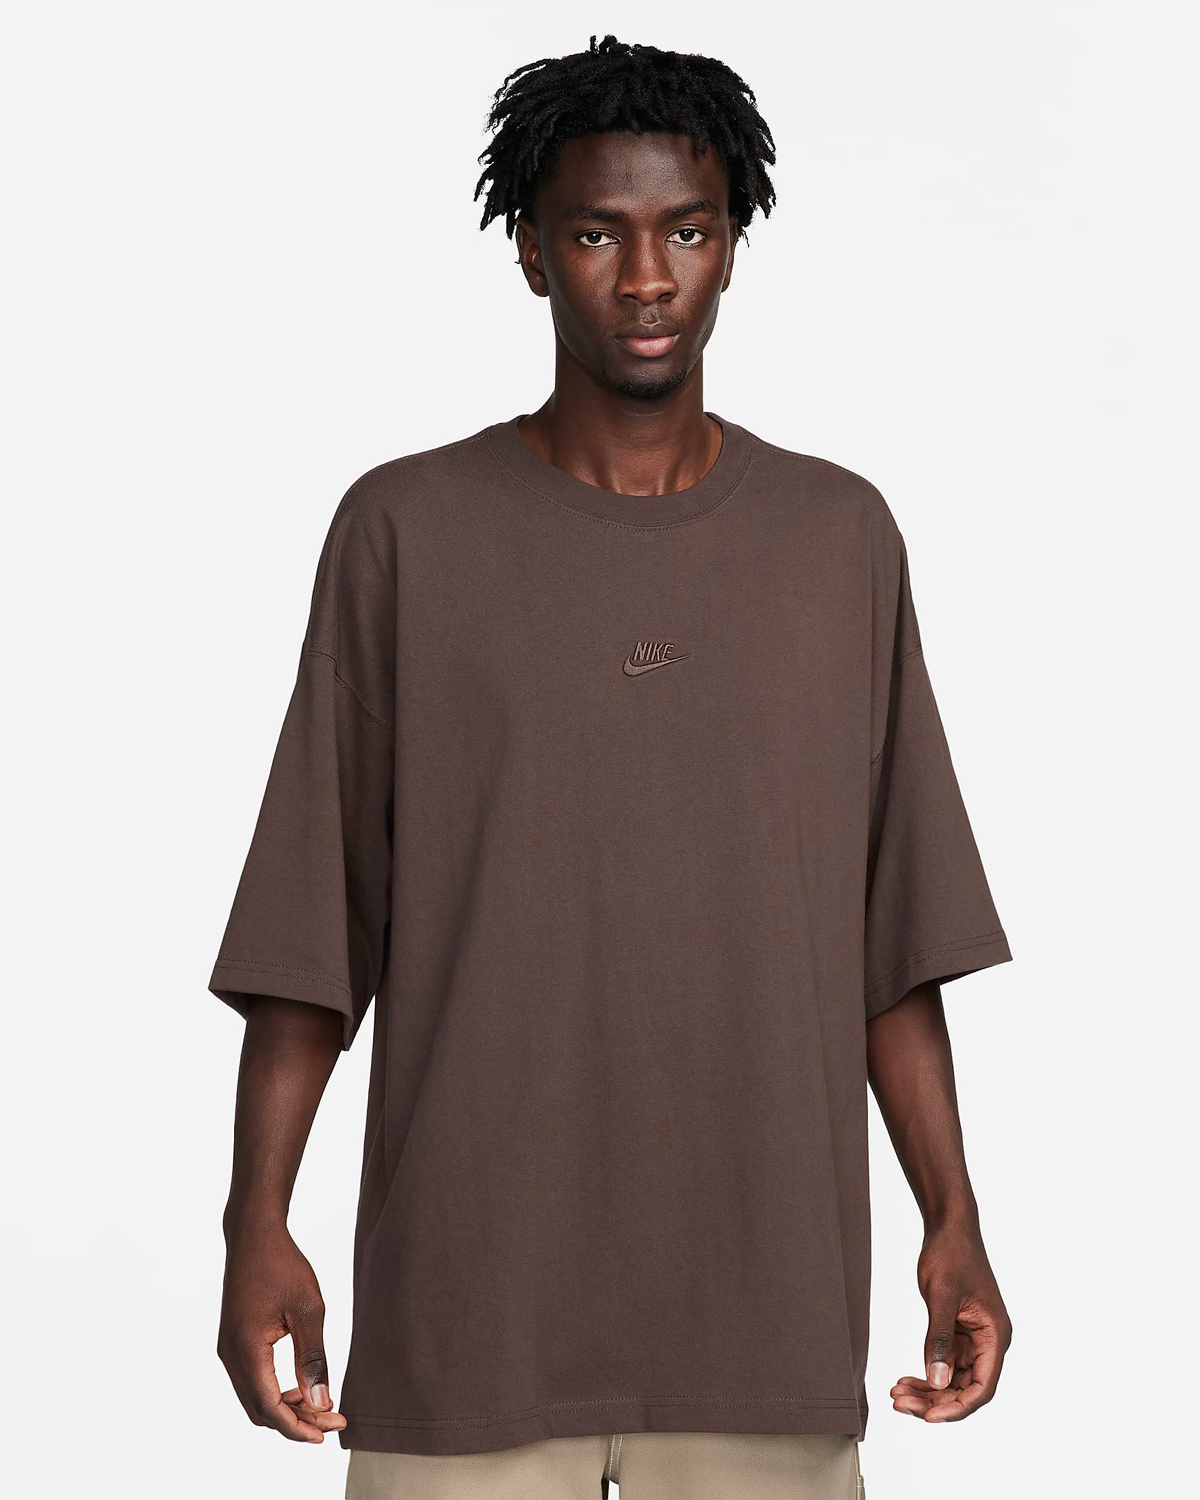 Nike-Sportswear-Premium-Oversized-T-Shirt-Baroque-Brown